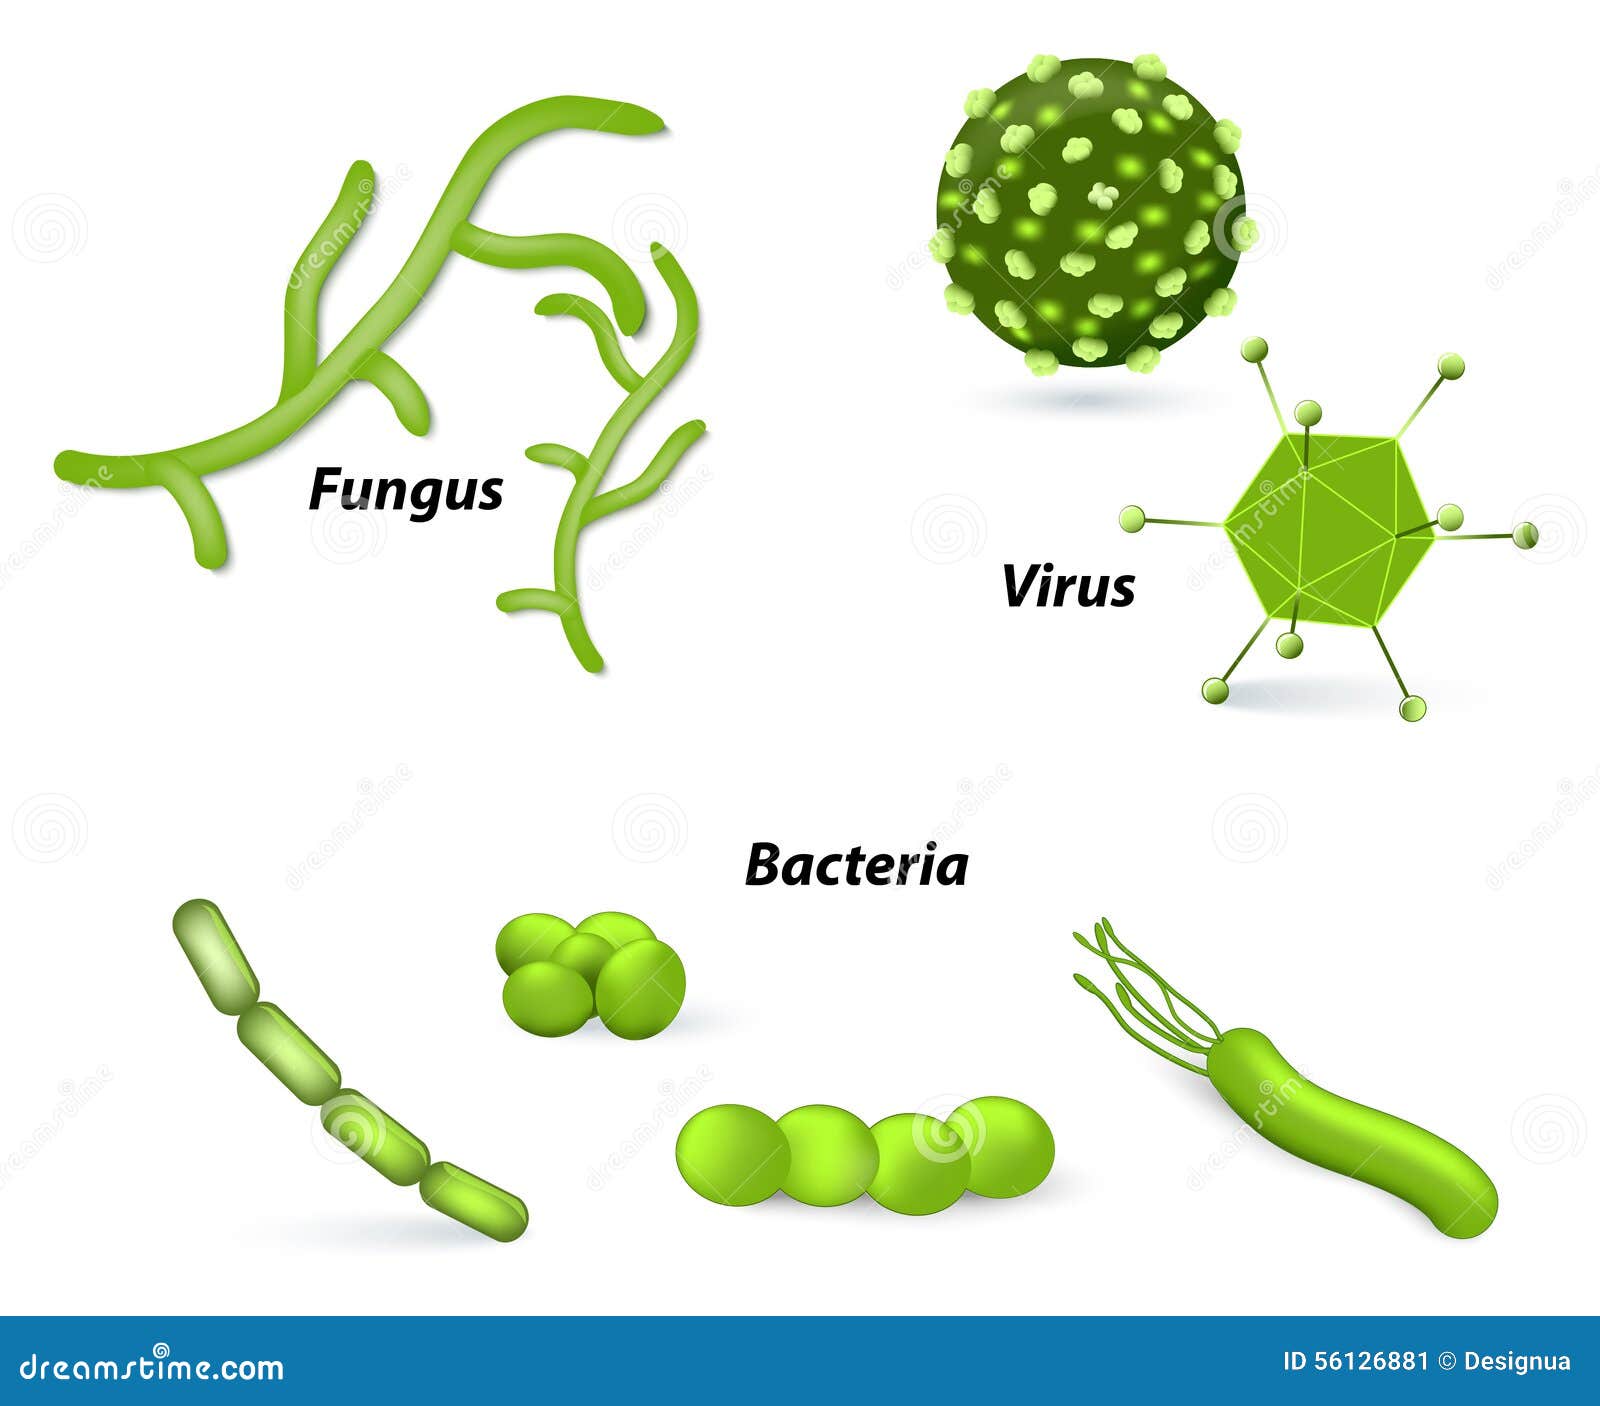 virus, bacteria and fungi